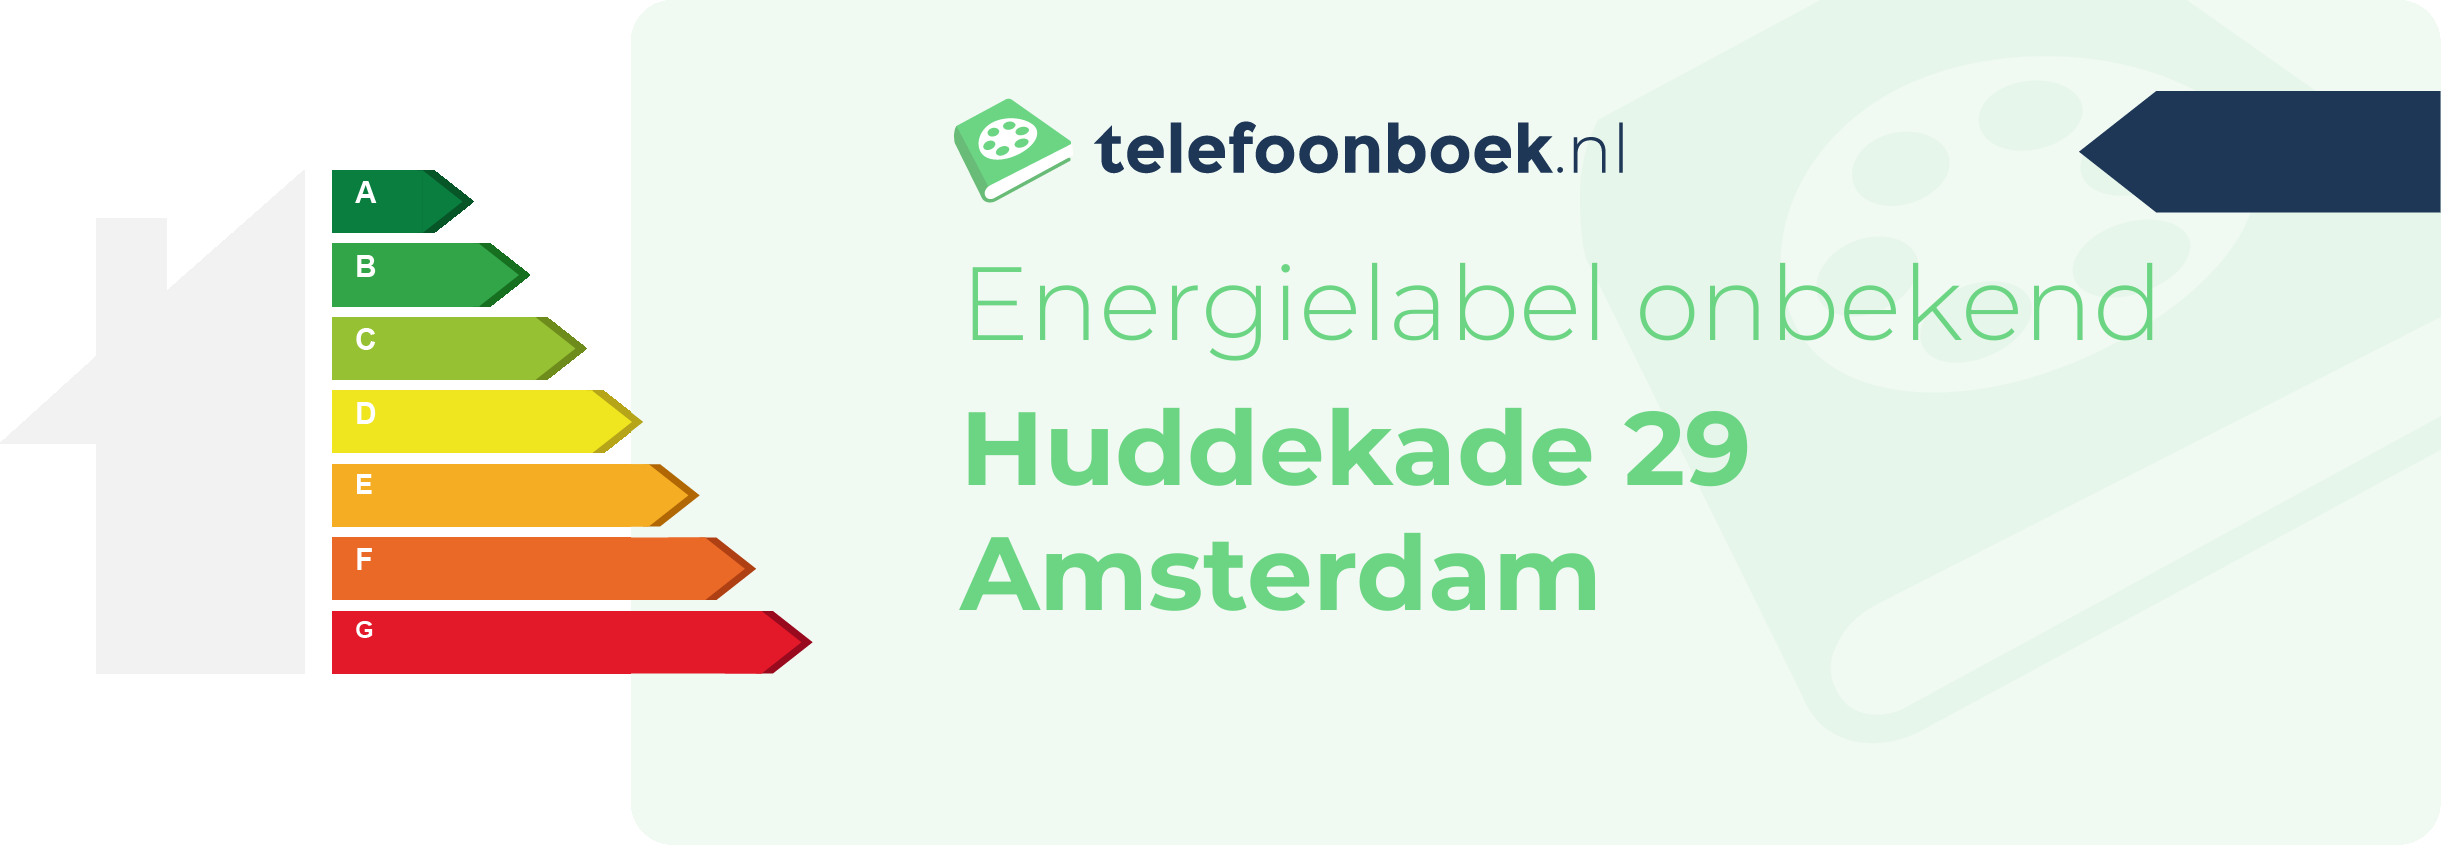 Energielabel Huddekade 29 Amsterdam